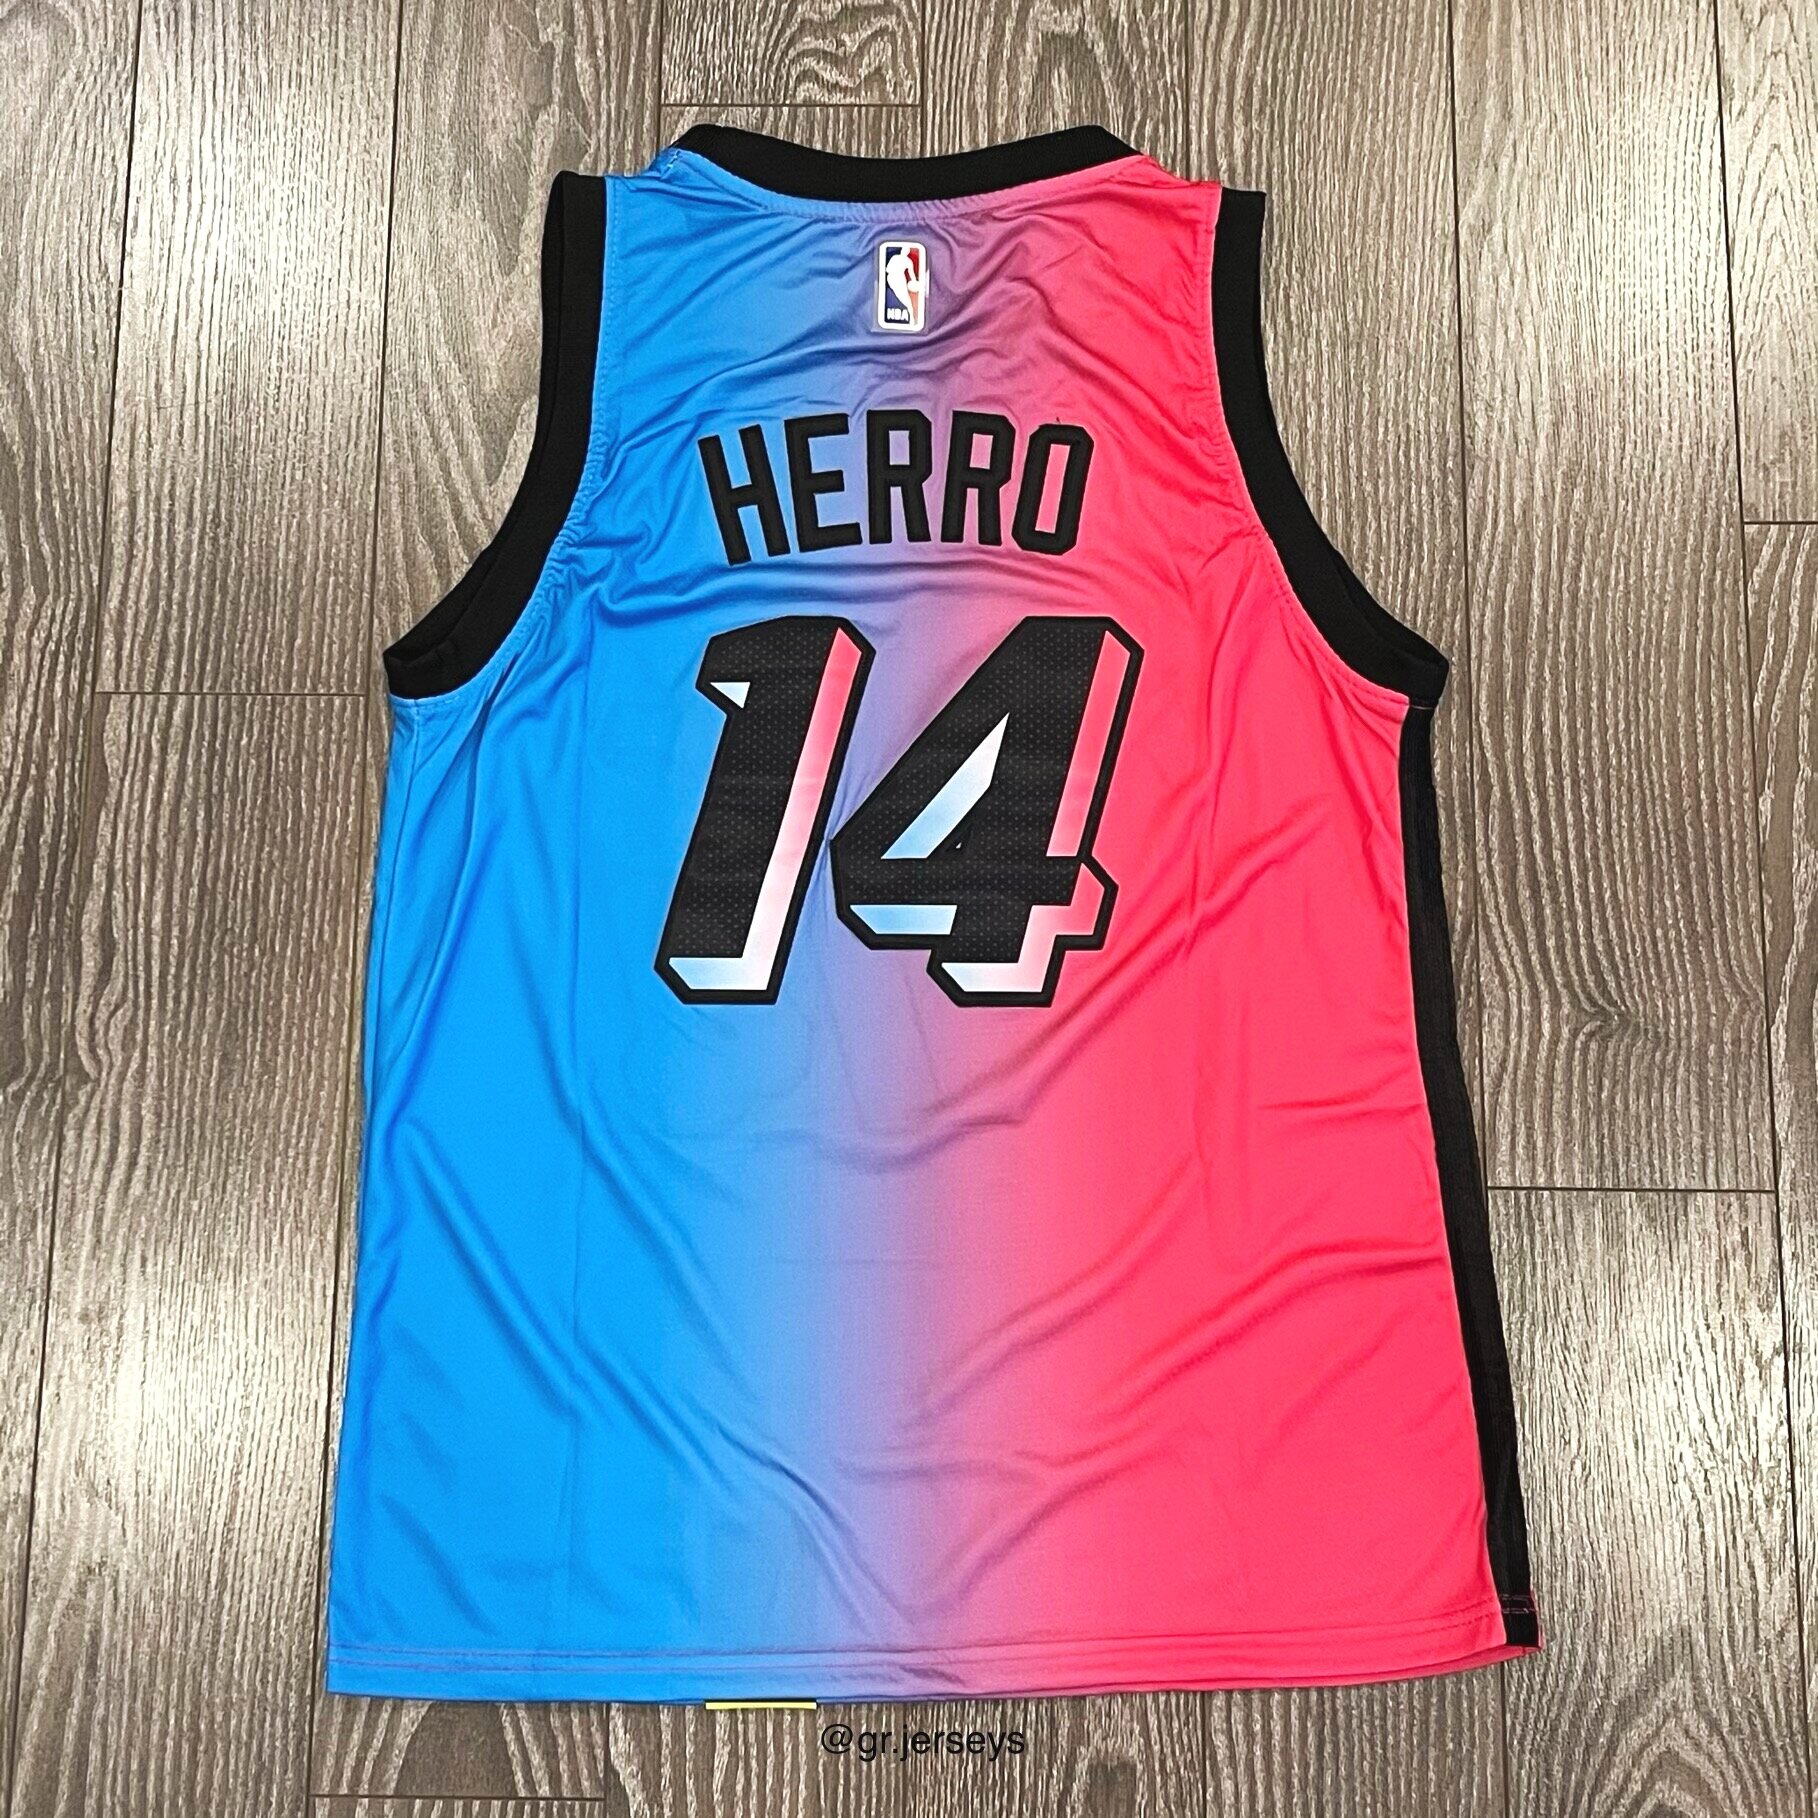 Tyler Herro #14 Miami Heat Vice Versa City Edition Jersey Pink Blue XXL